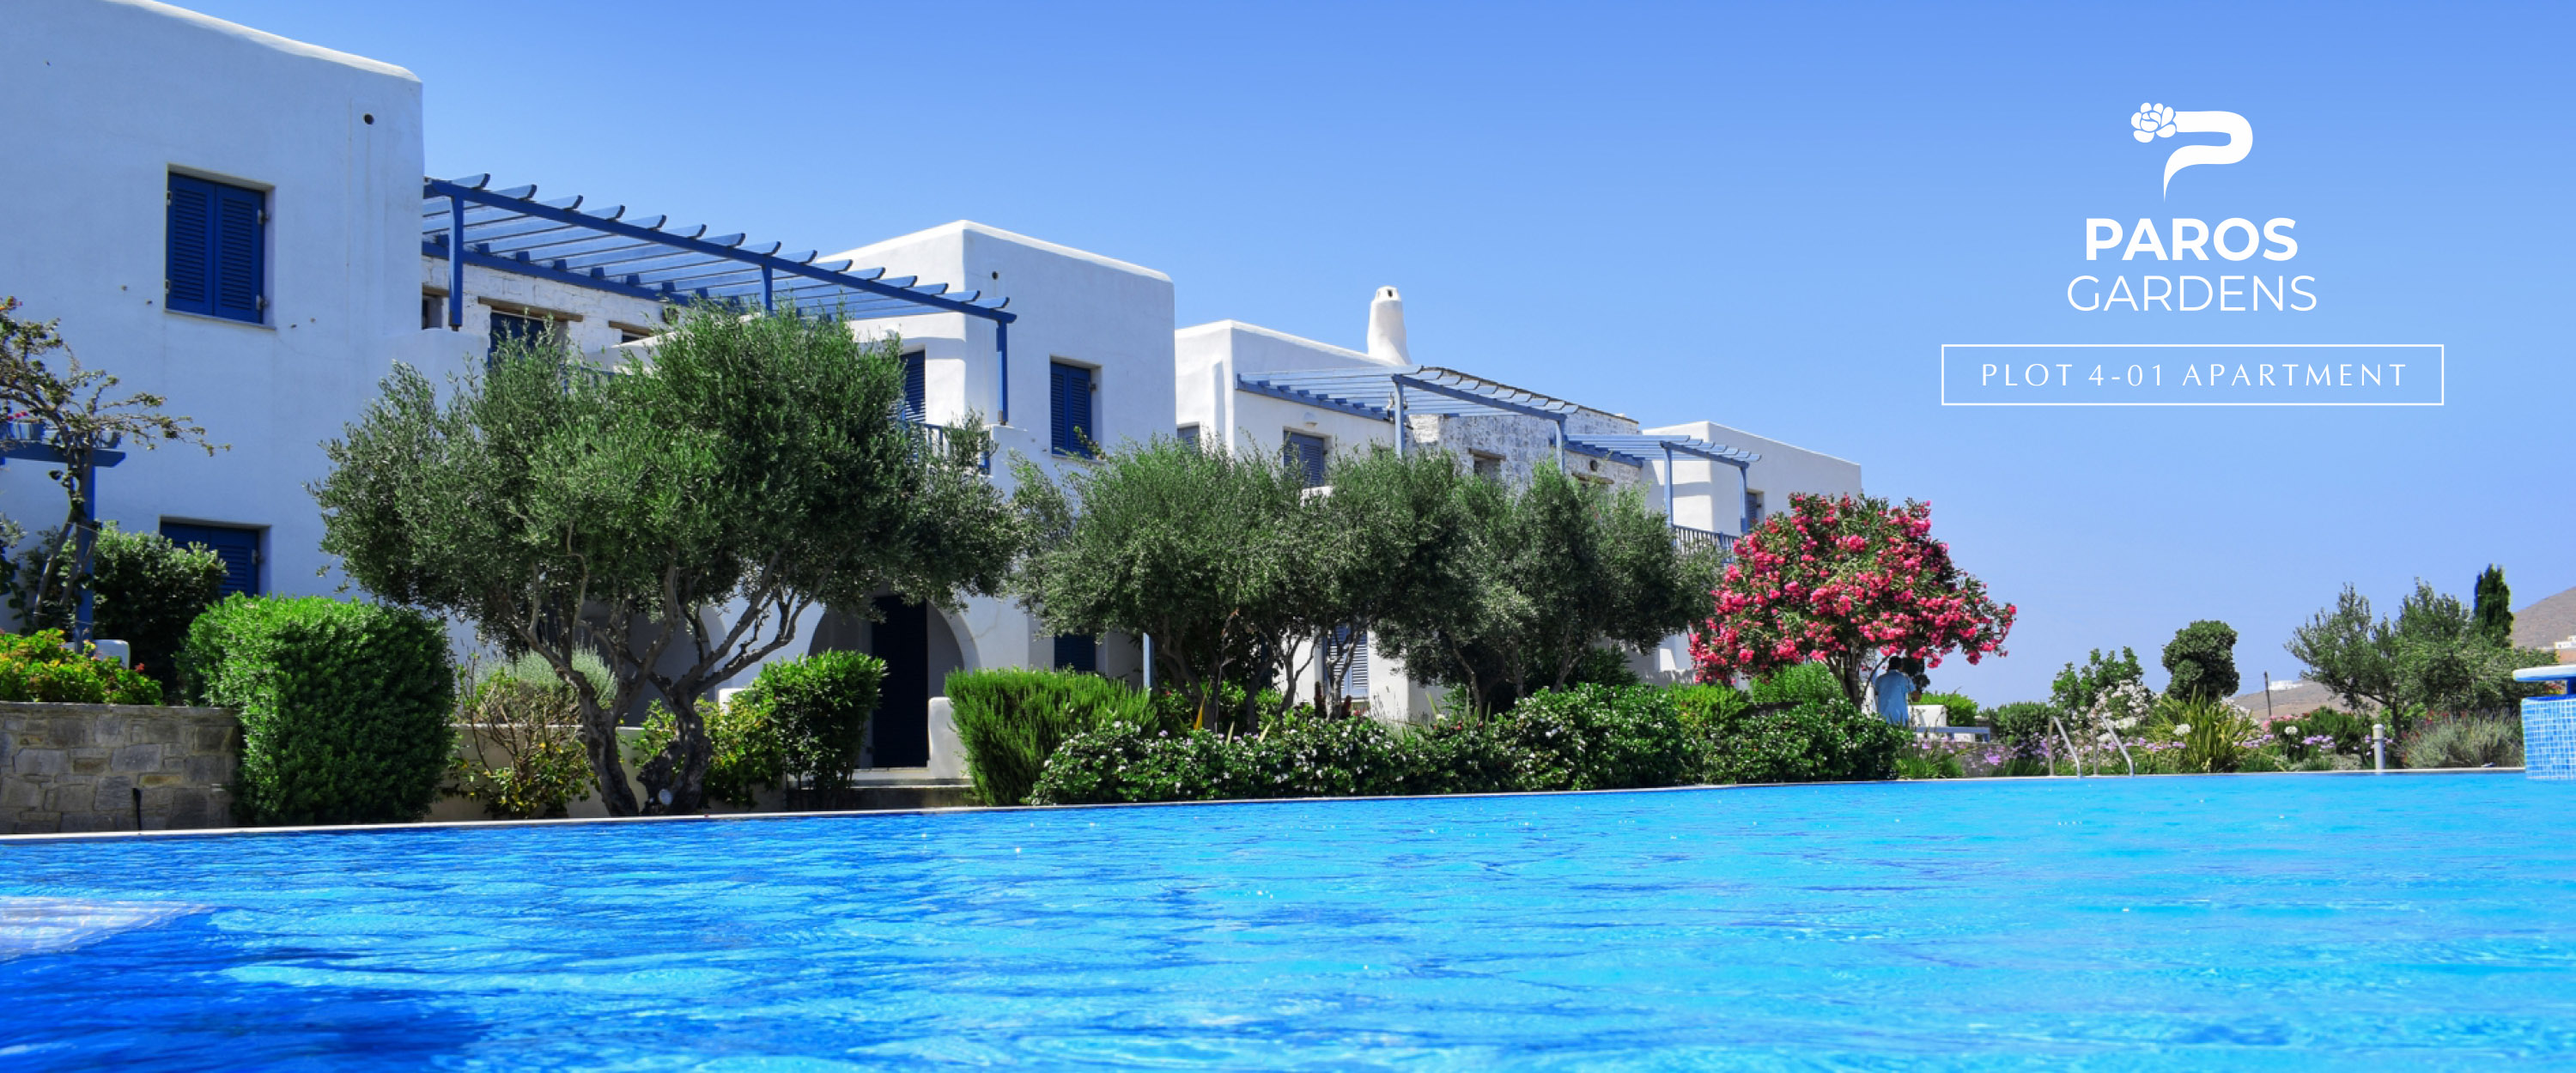 2 bedroom Apartment Paros Flat For Sale | Leptos Estates  at Paros 